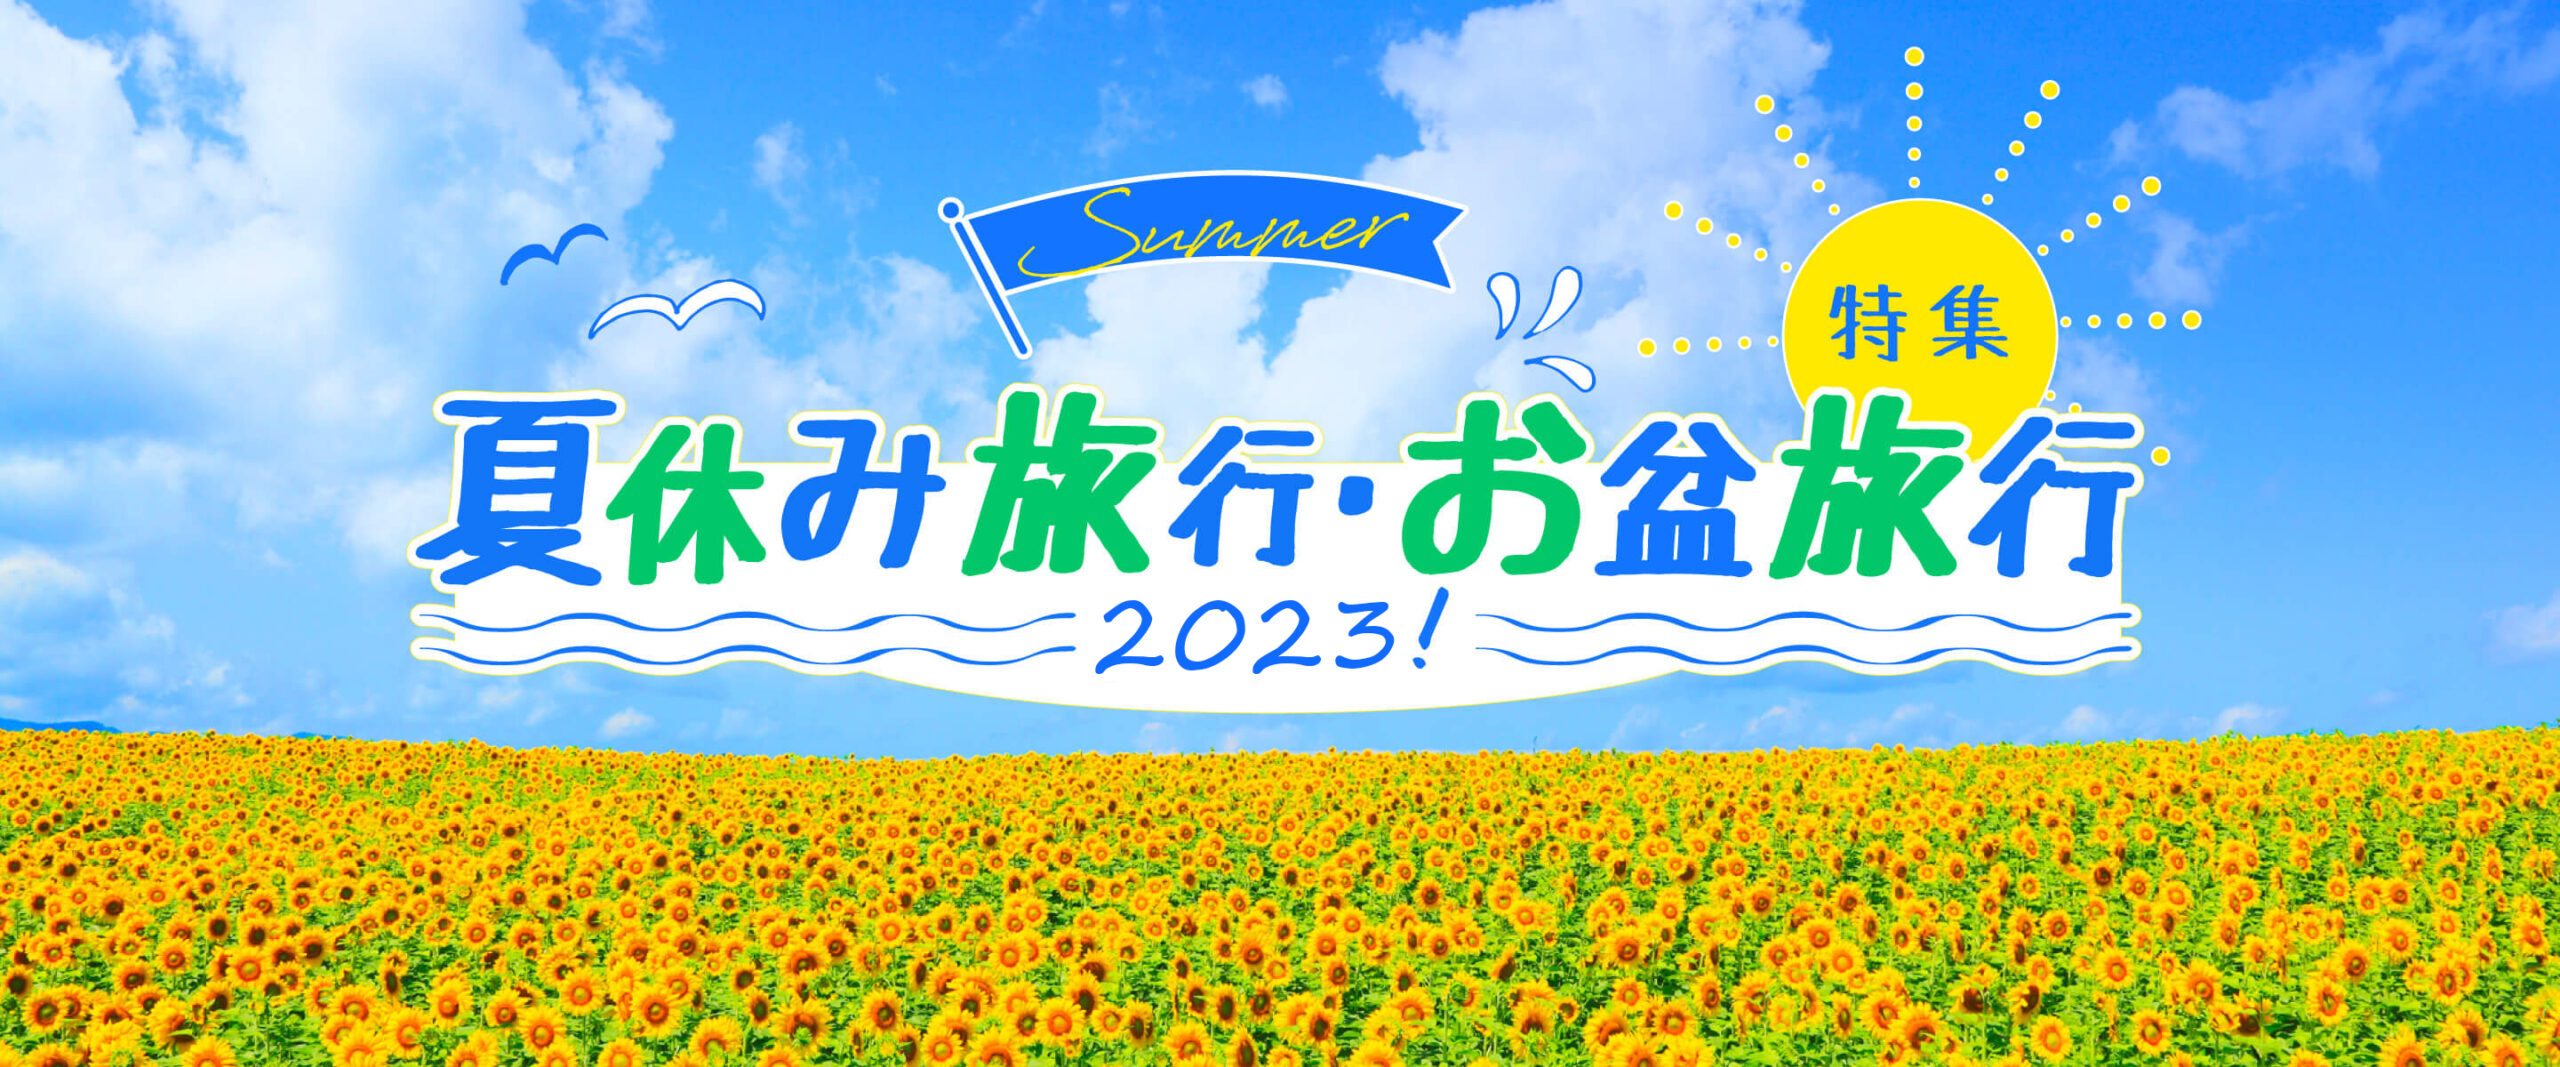 夏休み旅行・お盆旅行特集2023